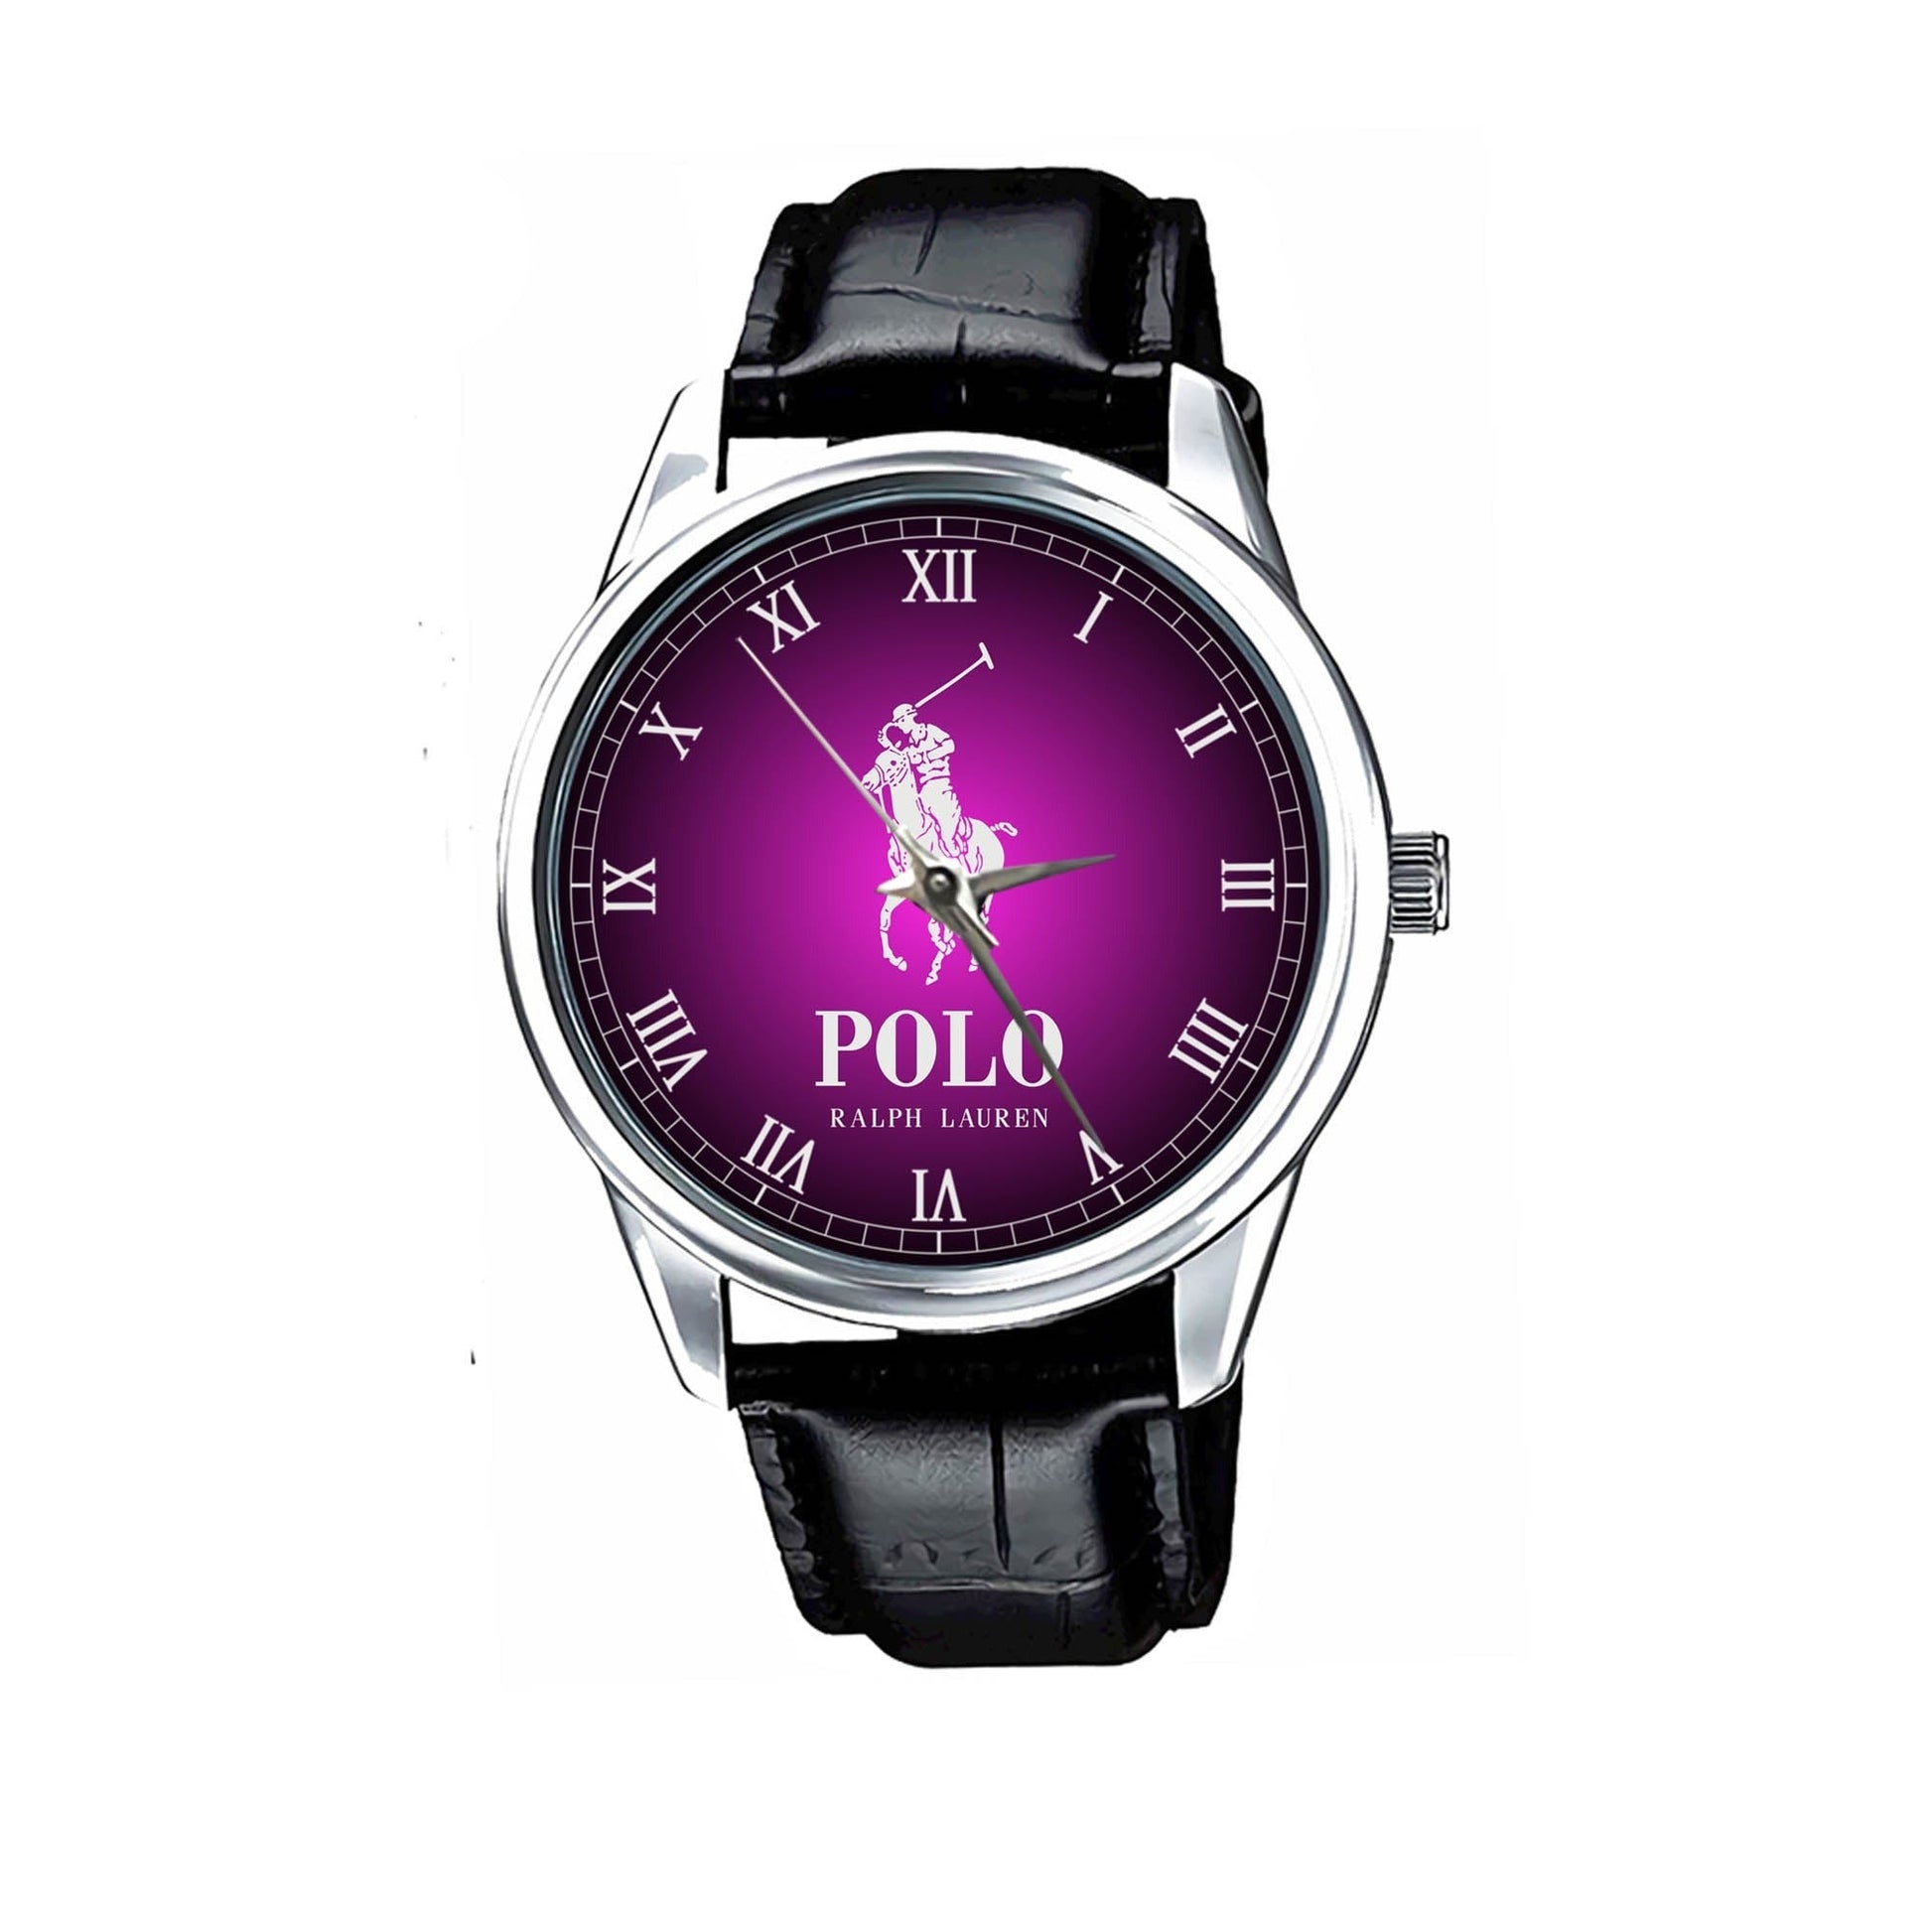 Polo Ralph Lauren Watches KP624